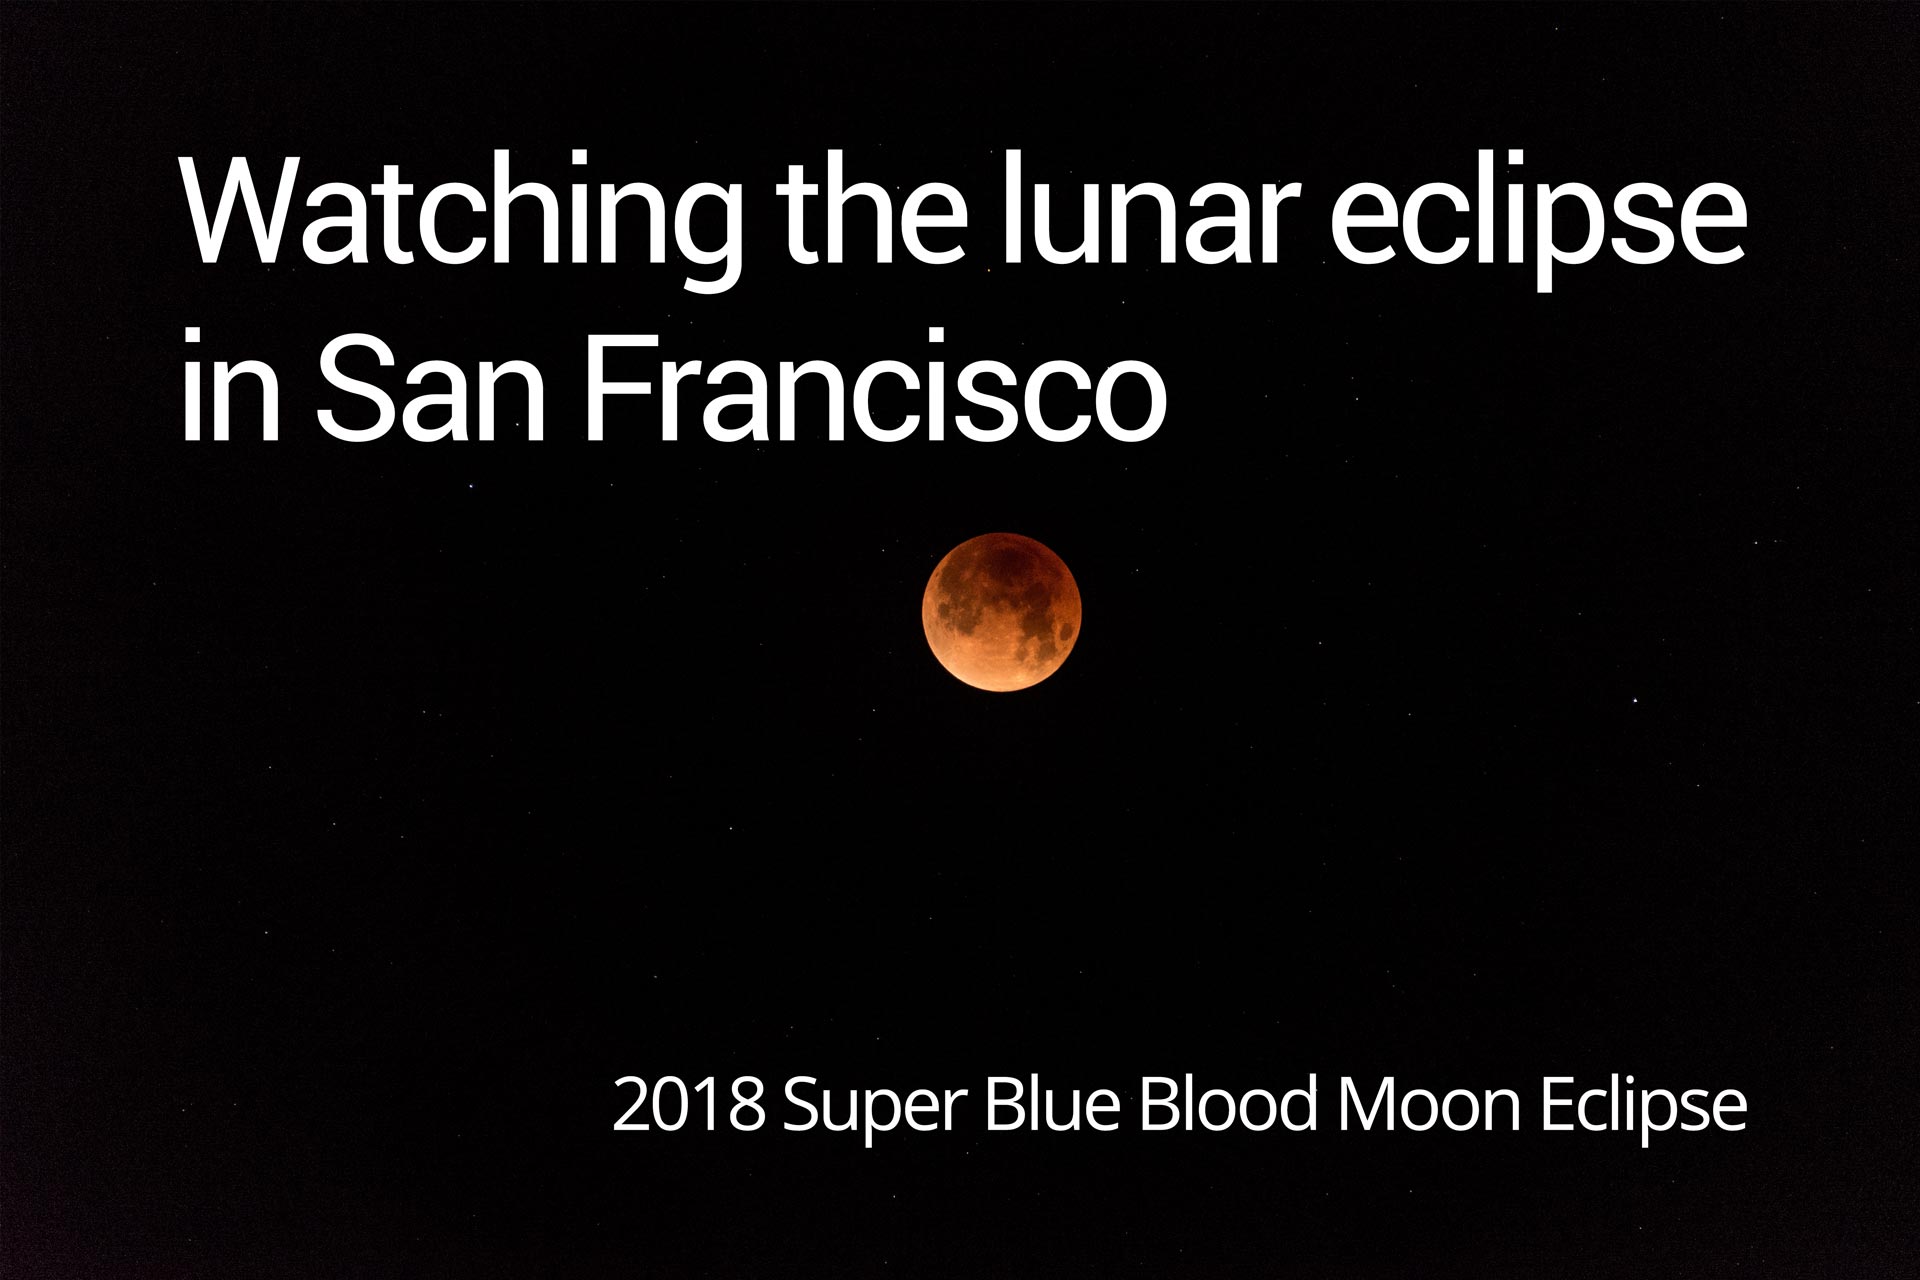 Super blue blood moon eclipse 2018